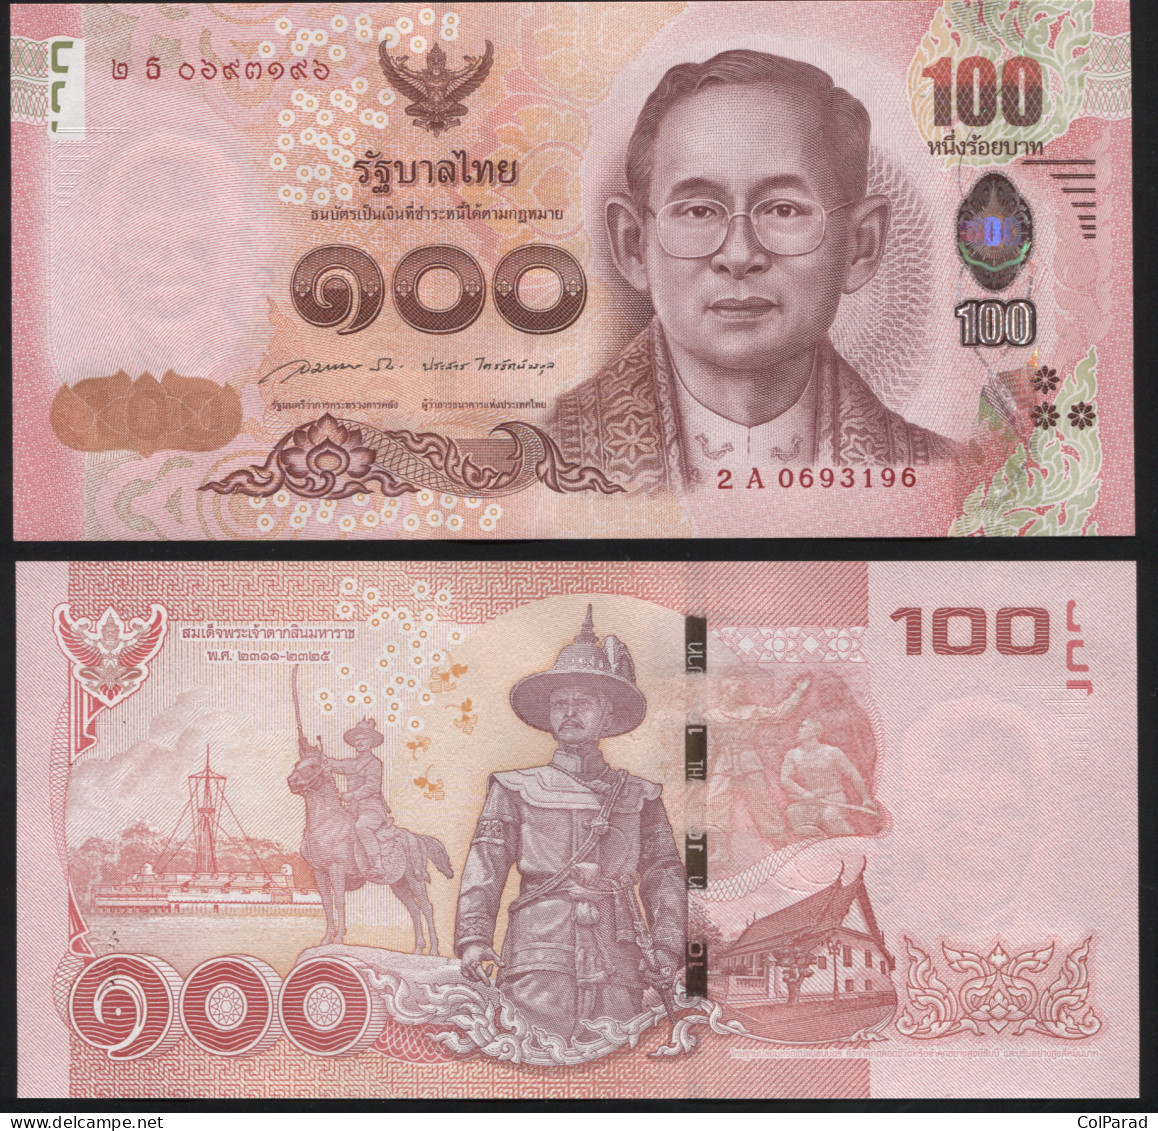 THAILAND 100 BAHT - ND (2015) - Paper Unc - P.120a Banknote - Thailand